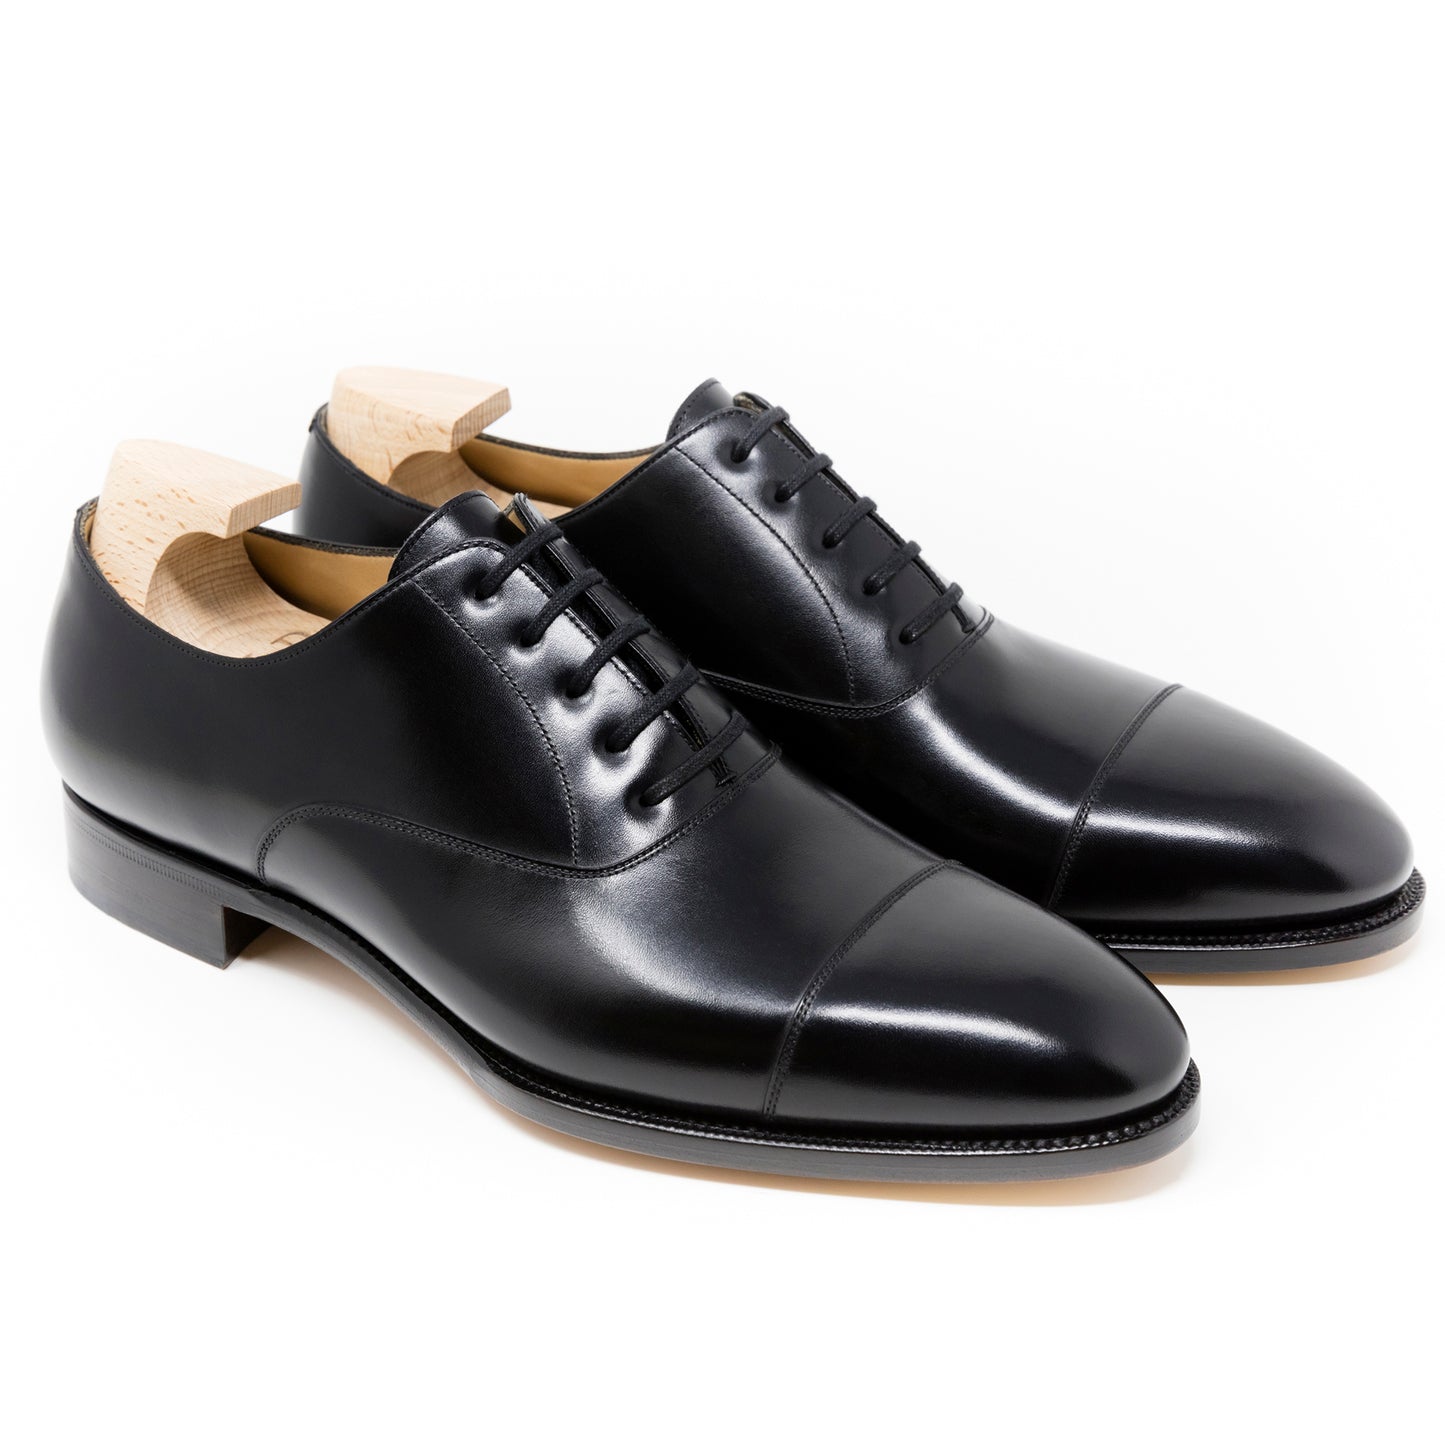 TLB Mallorca leather shoes 112 / GOYA / BOXCALF BLACK